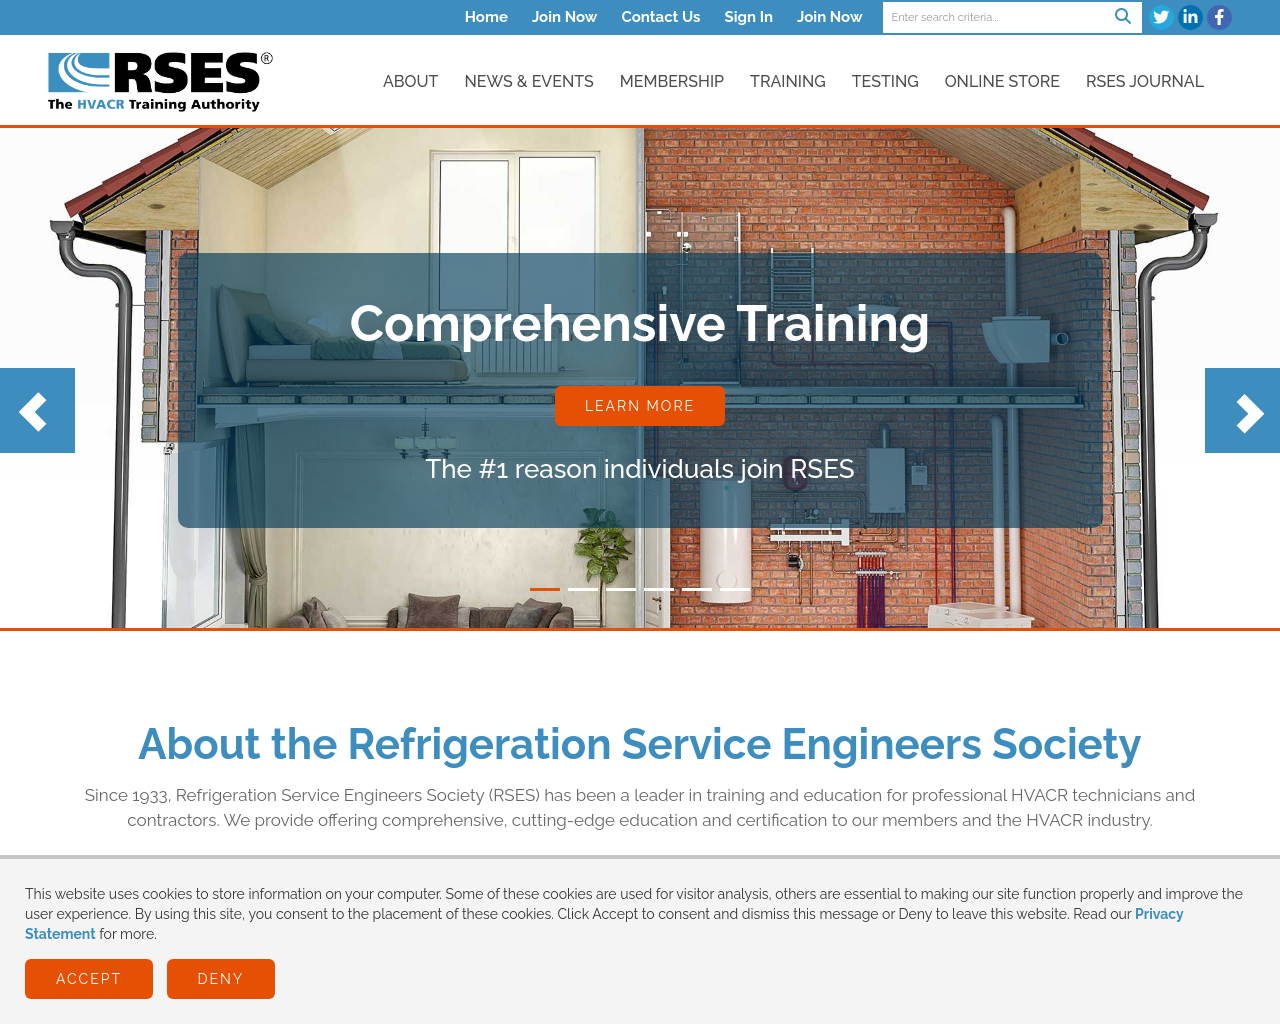 rses.org